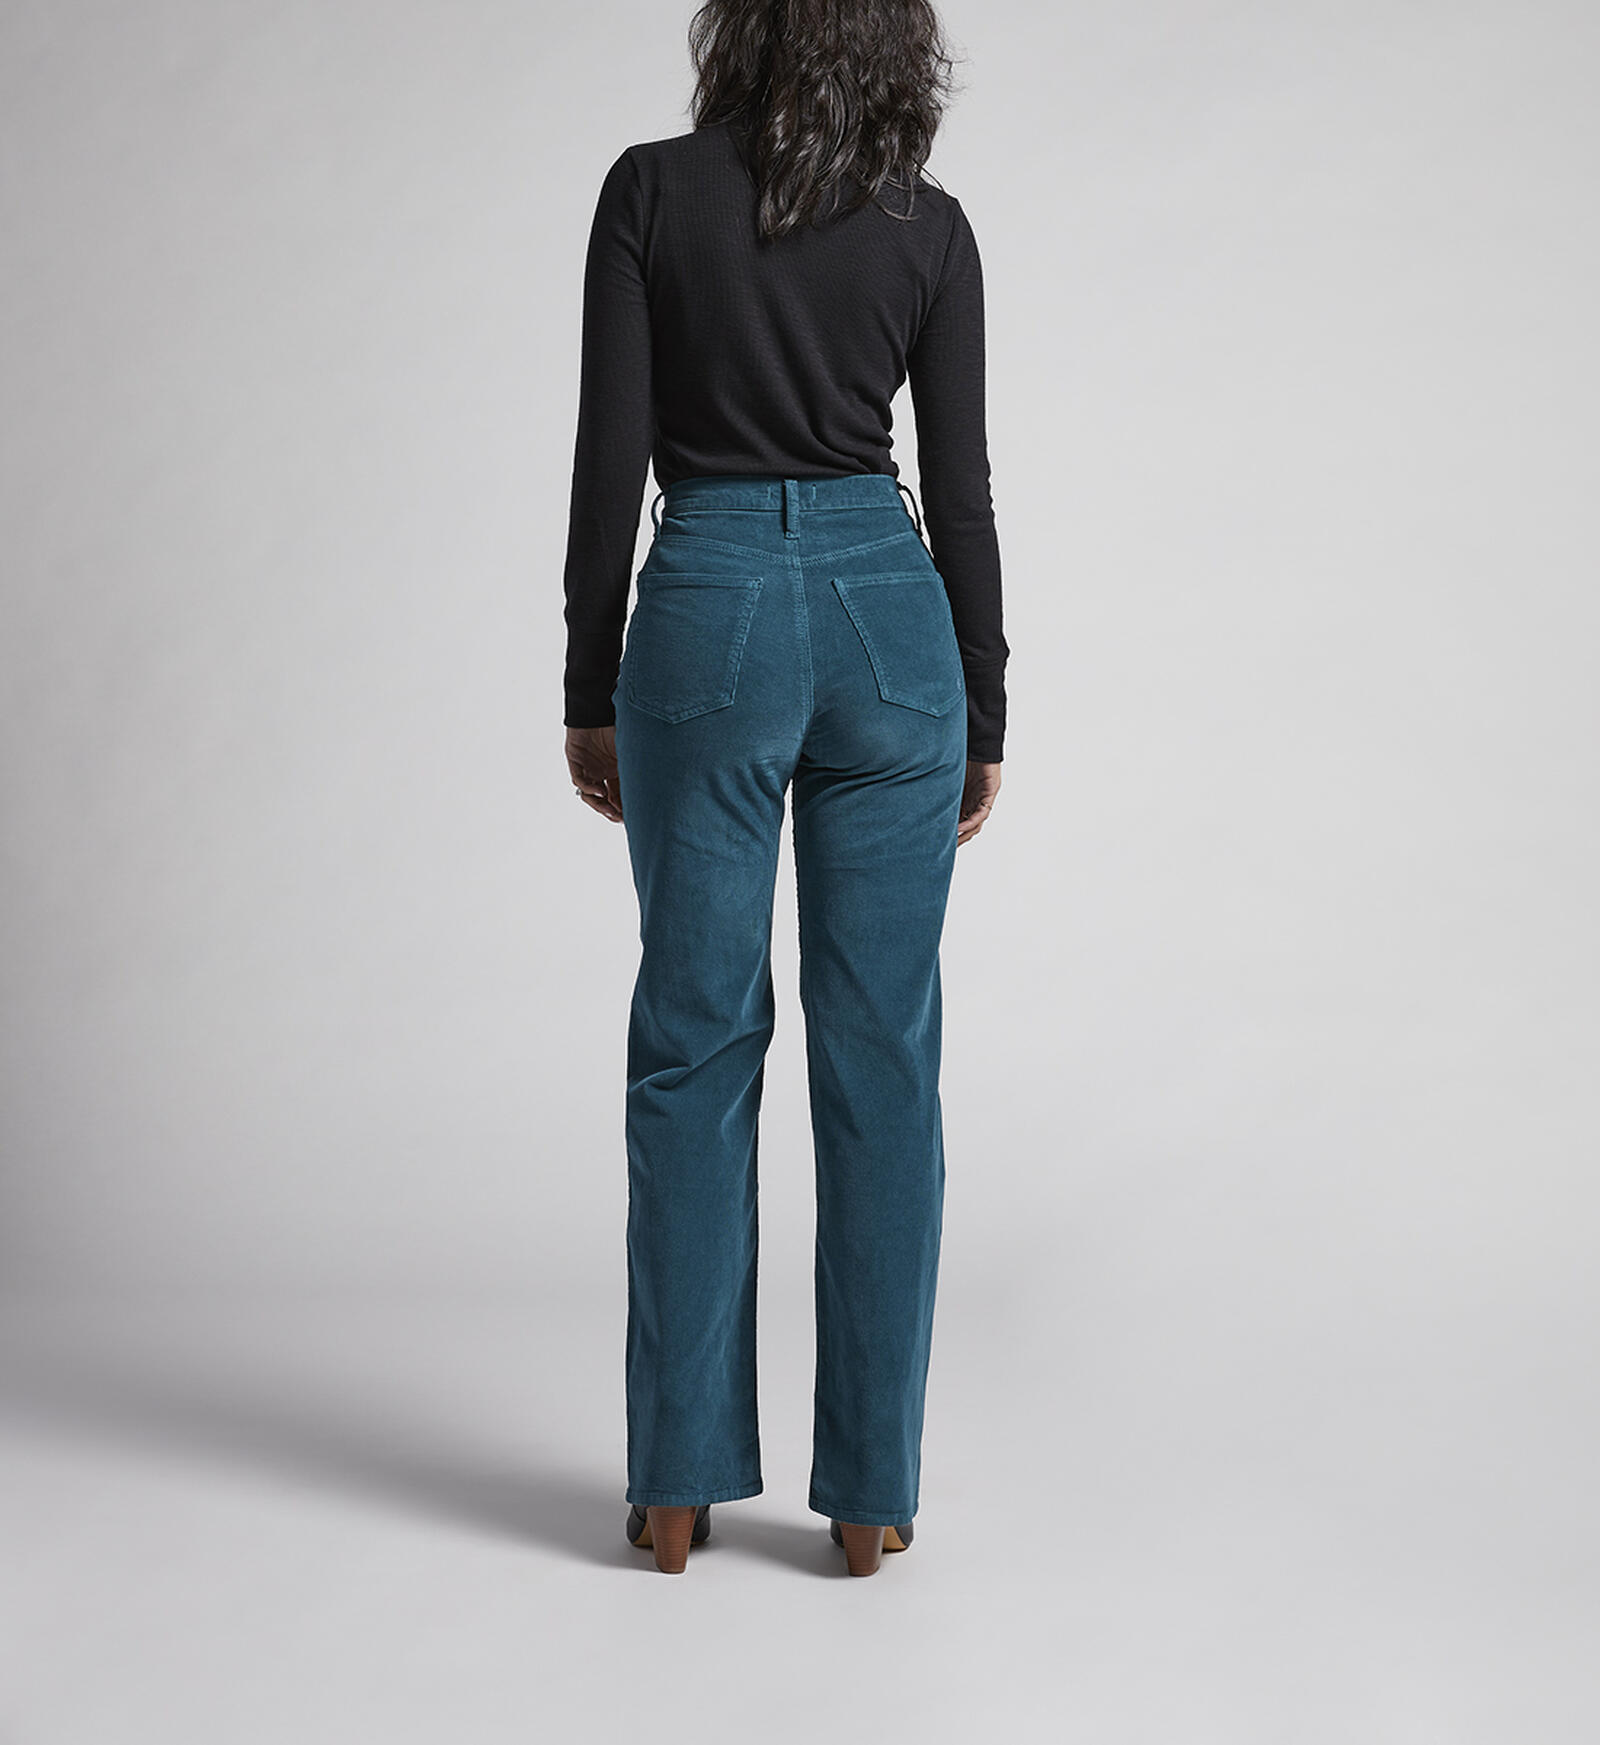 Fashion （sky Blue）Corduroy Straight Pants For Women Plus Size 27-35 High  Waist Slim Stretch Pants High-quality Cotton Chic Casual Mom's Trousers WJu